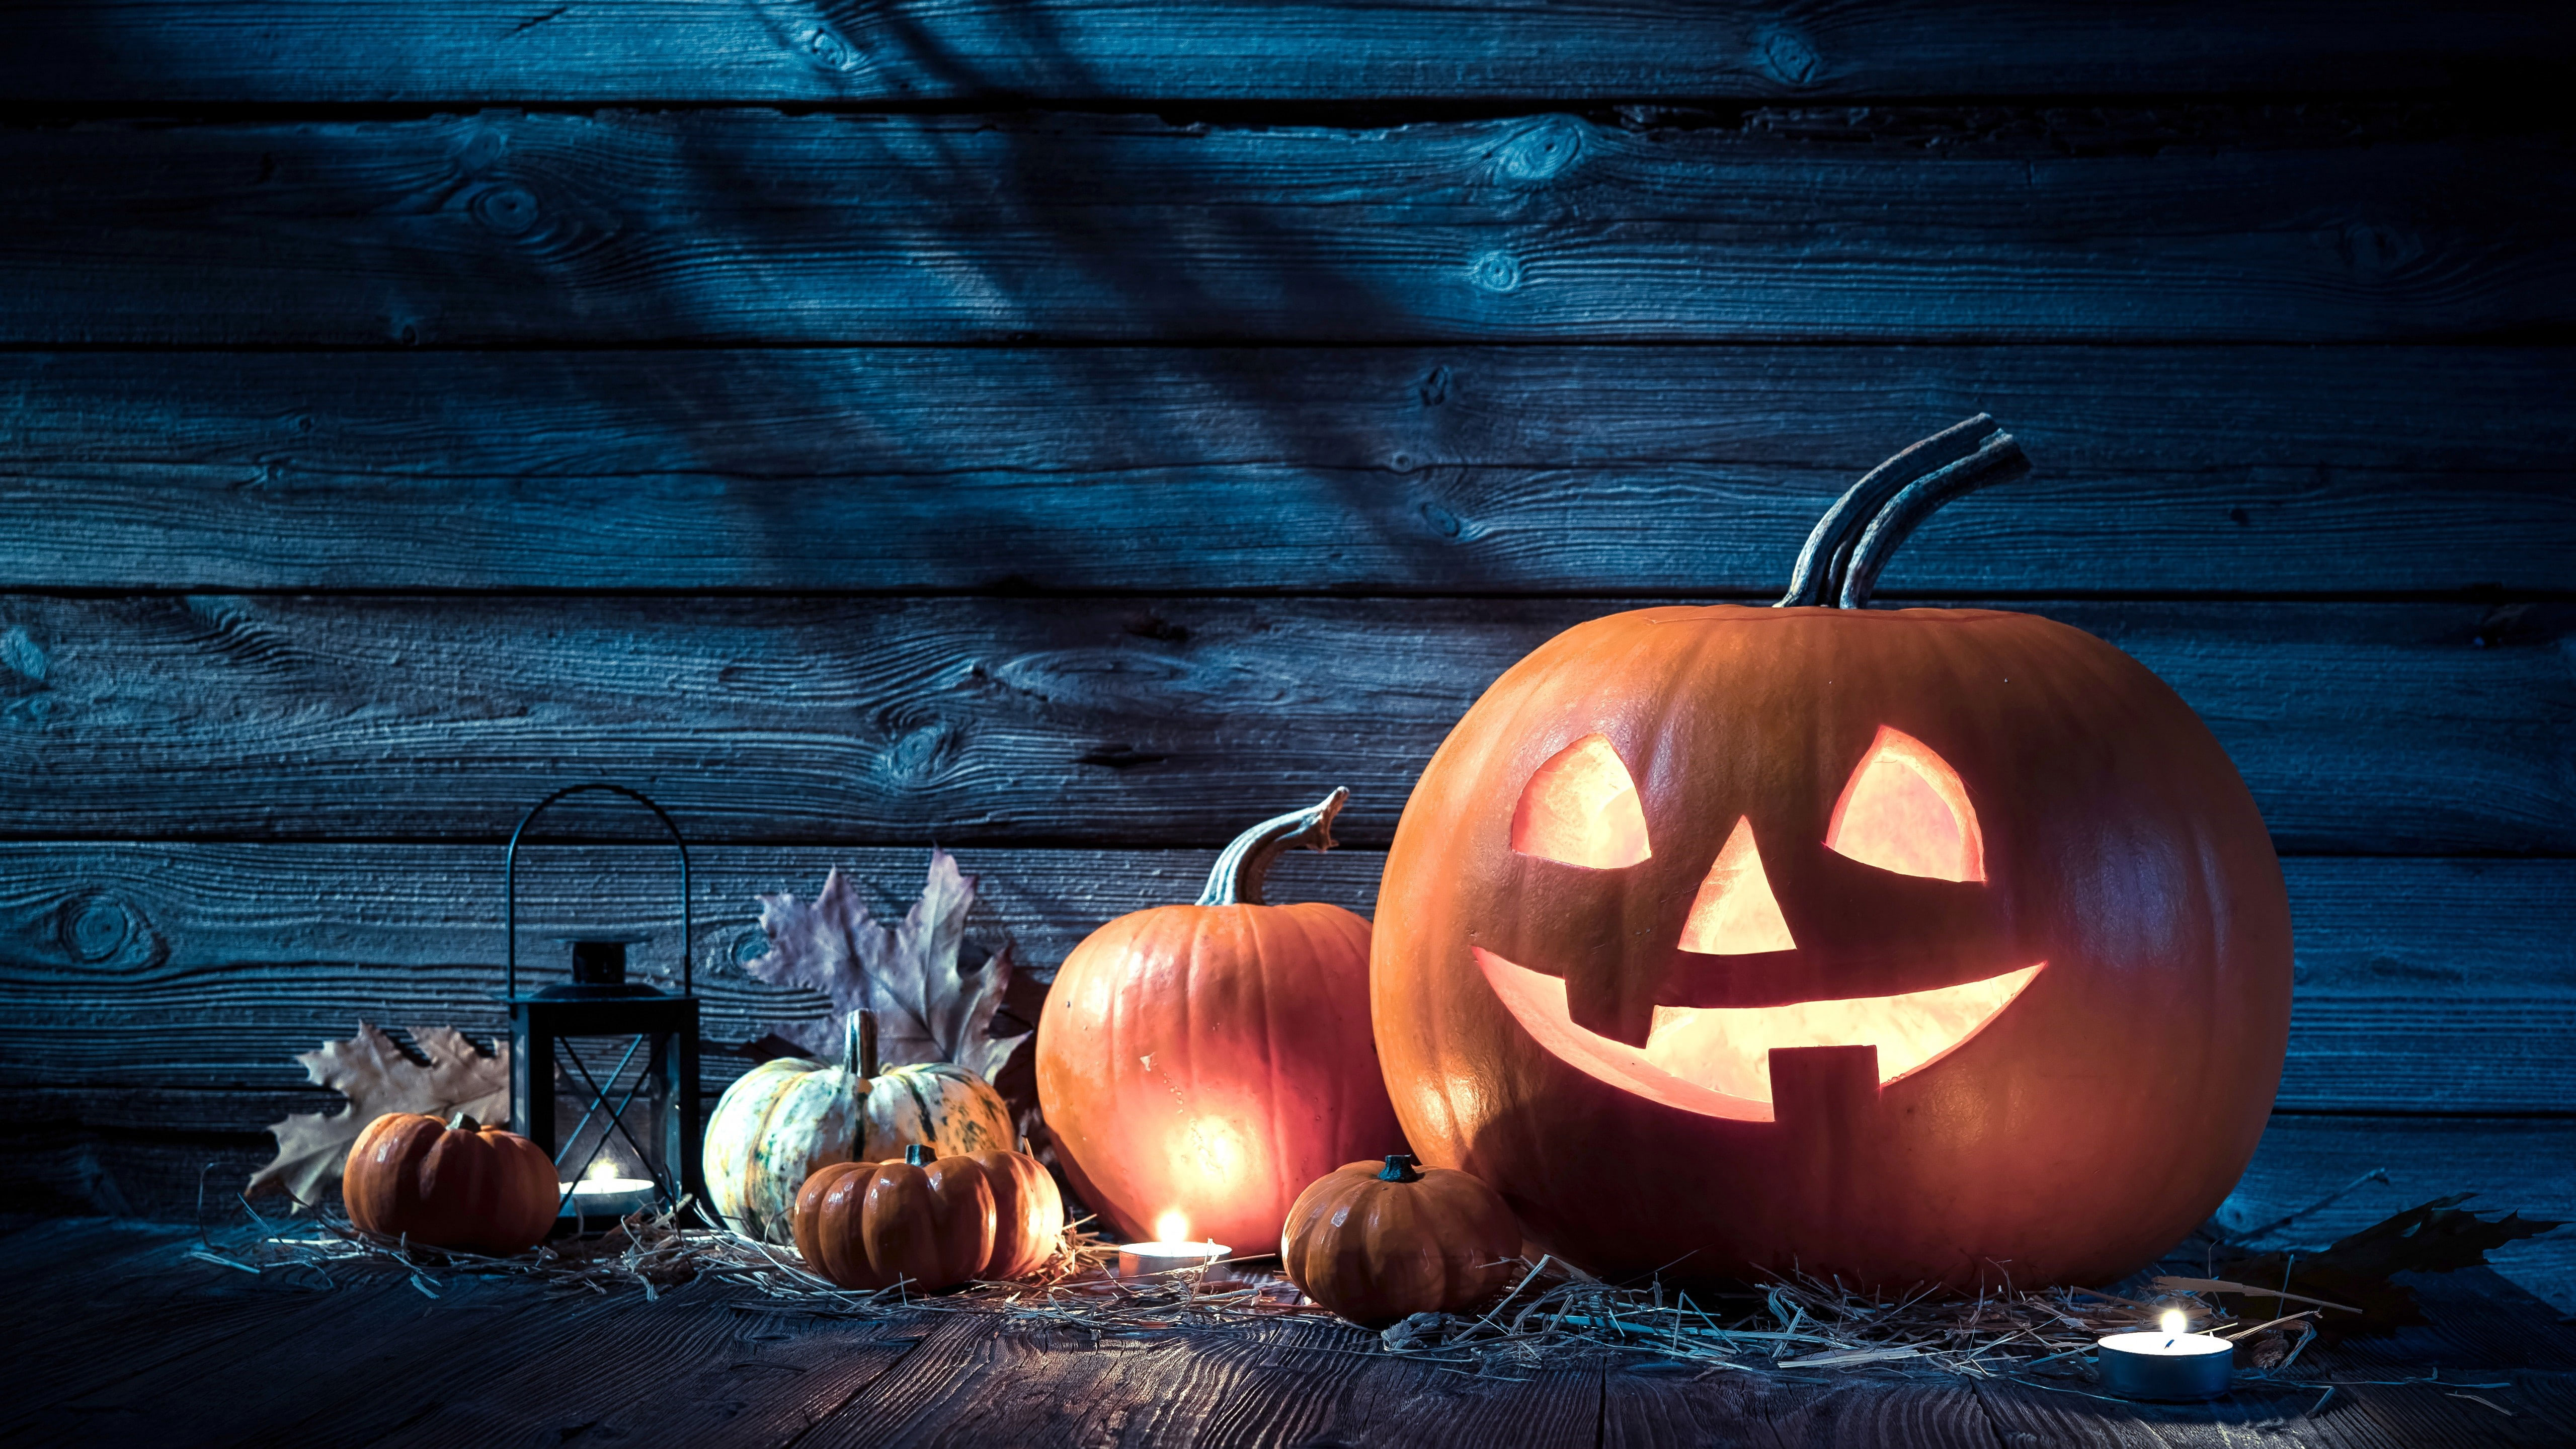 Wallpaper Halloween, Pumpkin, 5k Uhd, Candlelight, Jack O, 5k uhd, Holidays